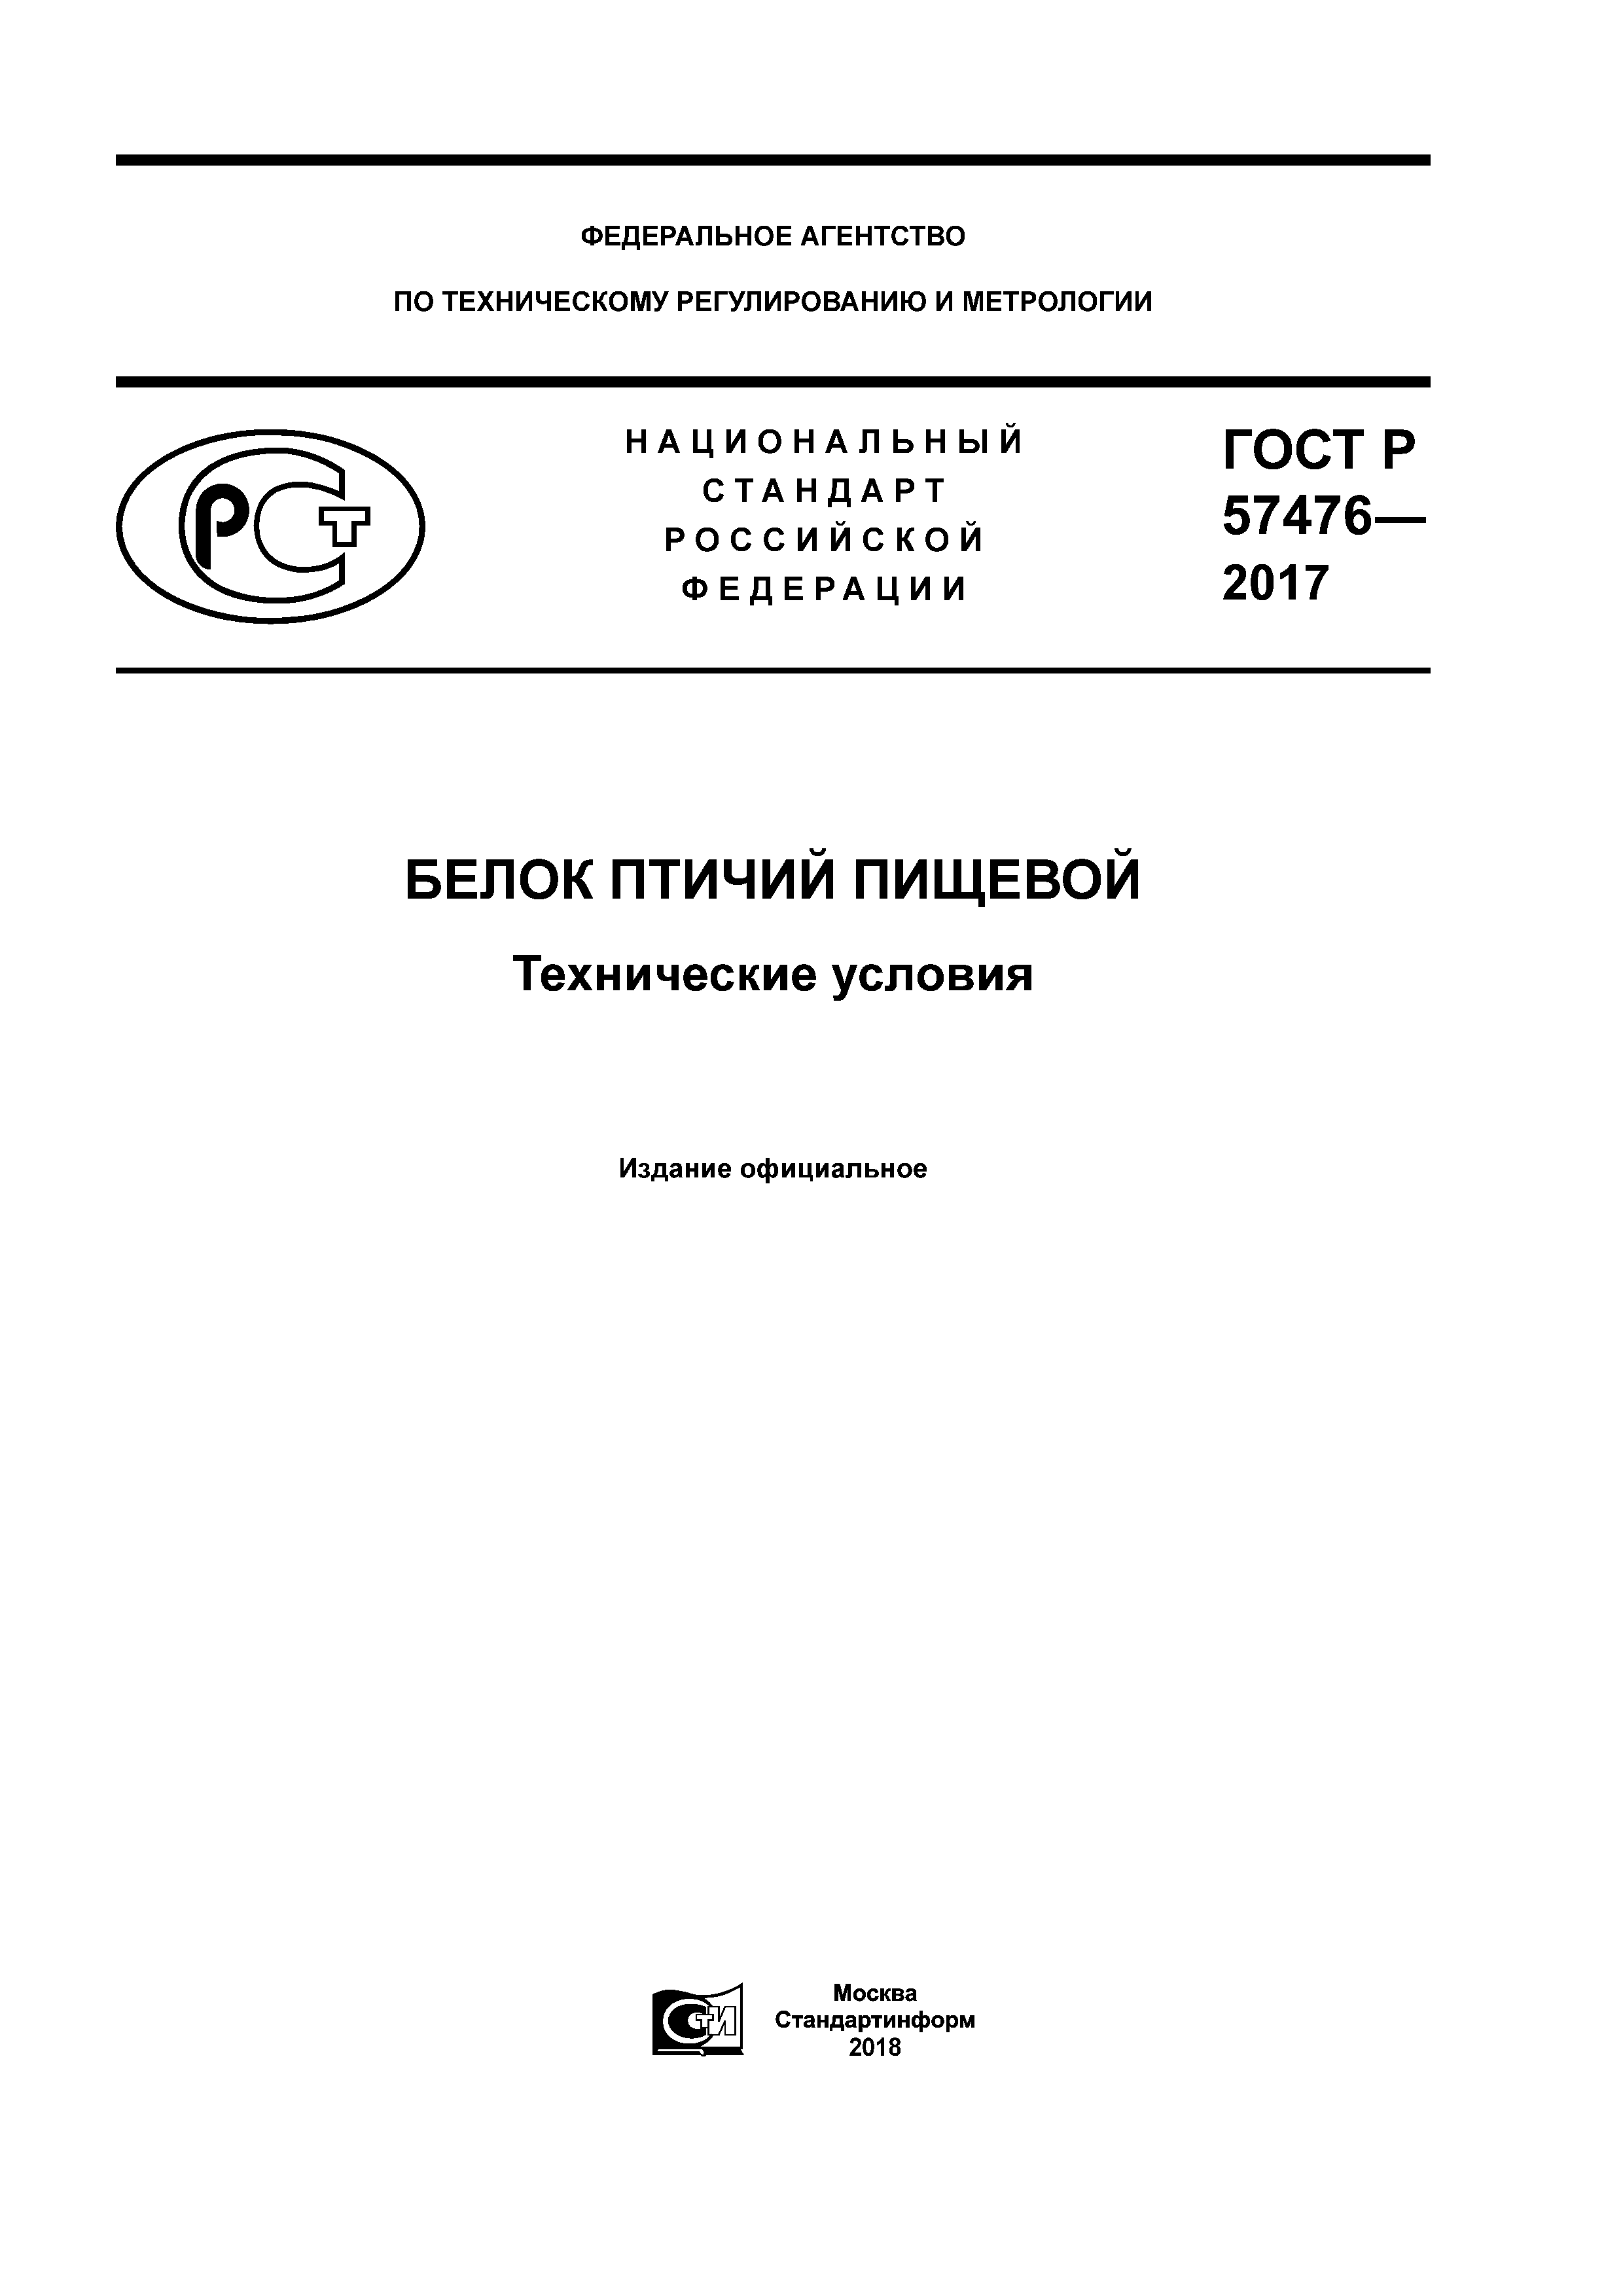 ГОСТ Р 57476-2017